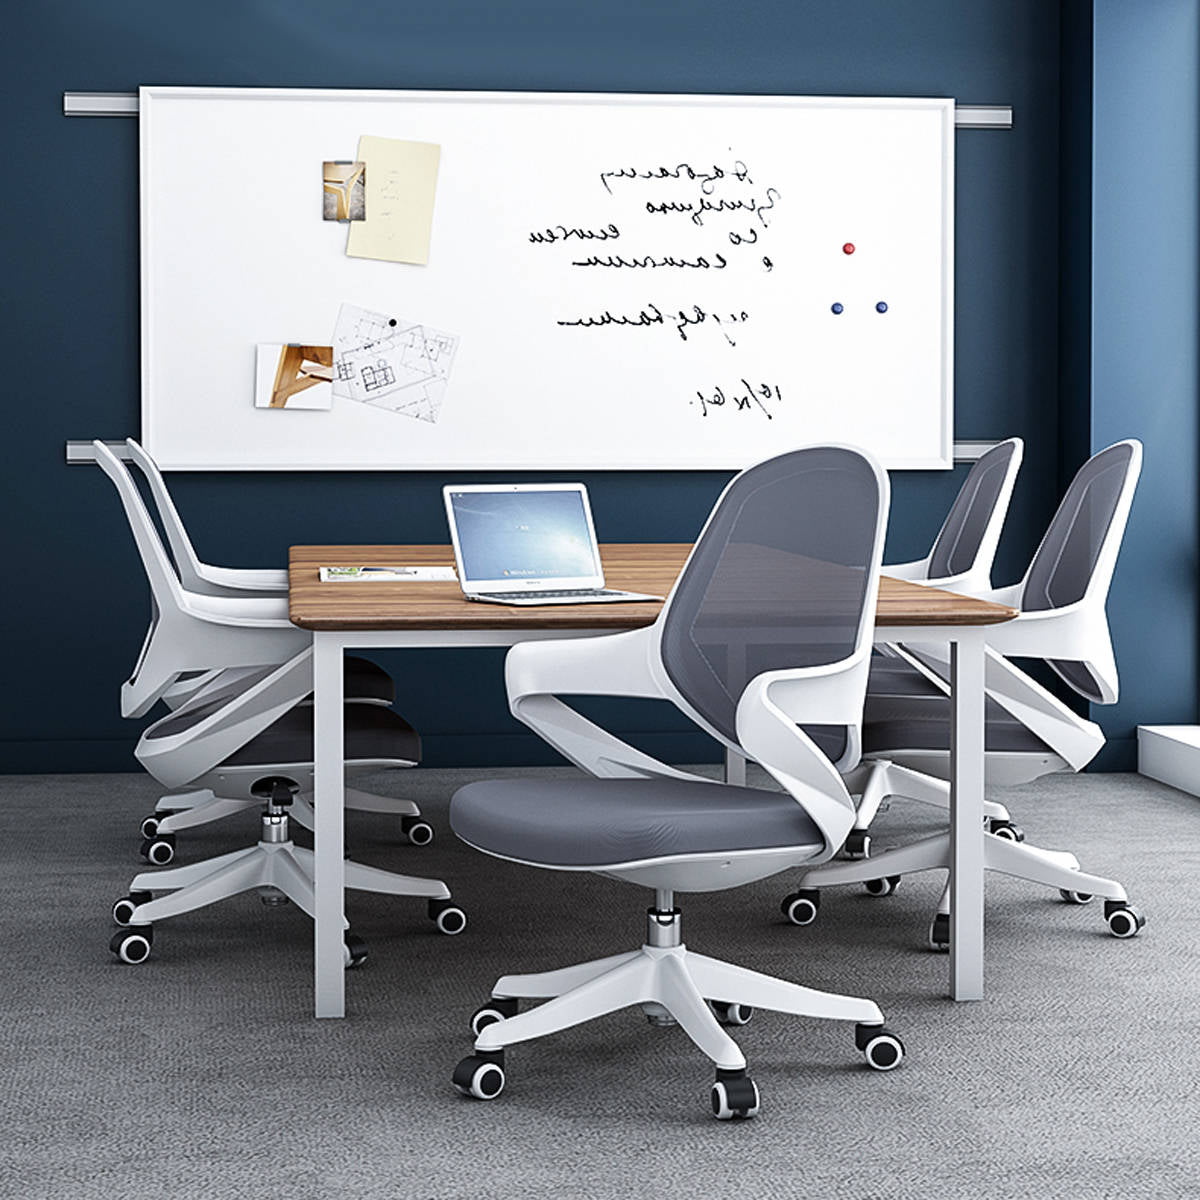 Ofelia ergonomikus irodai szék konferenciaterembe